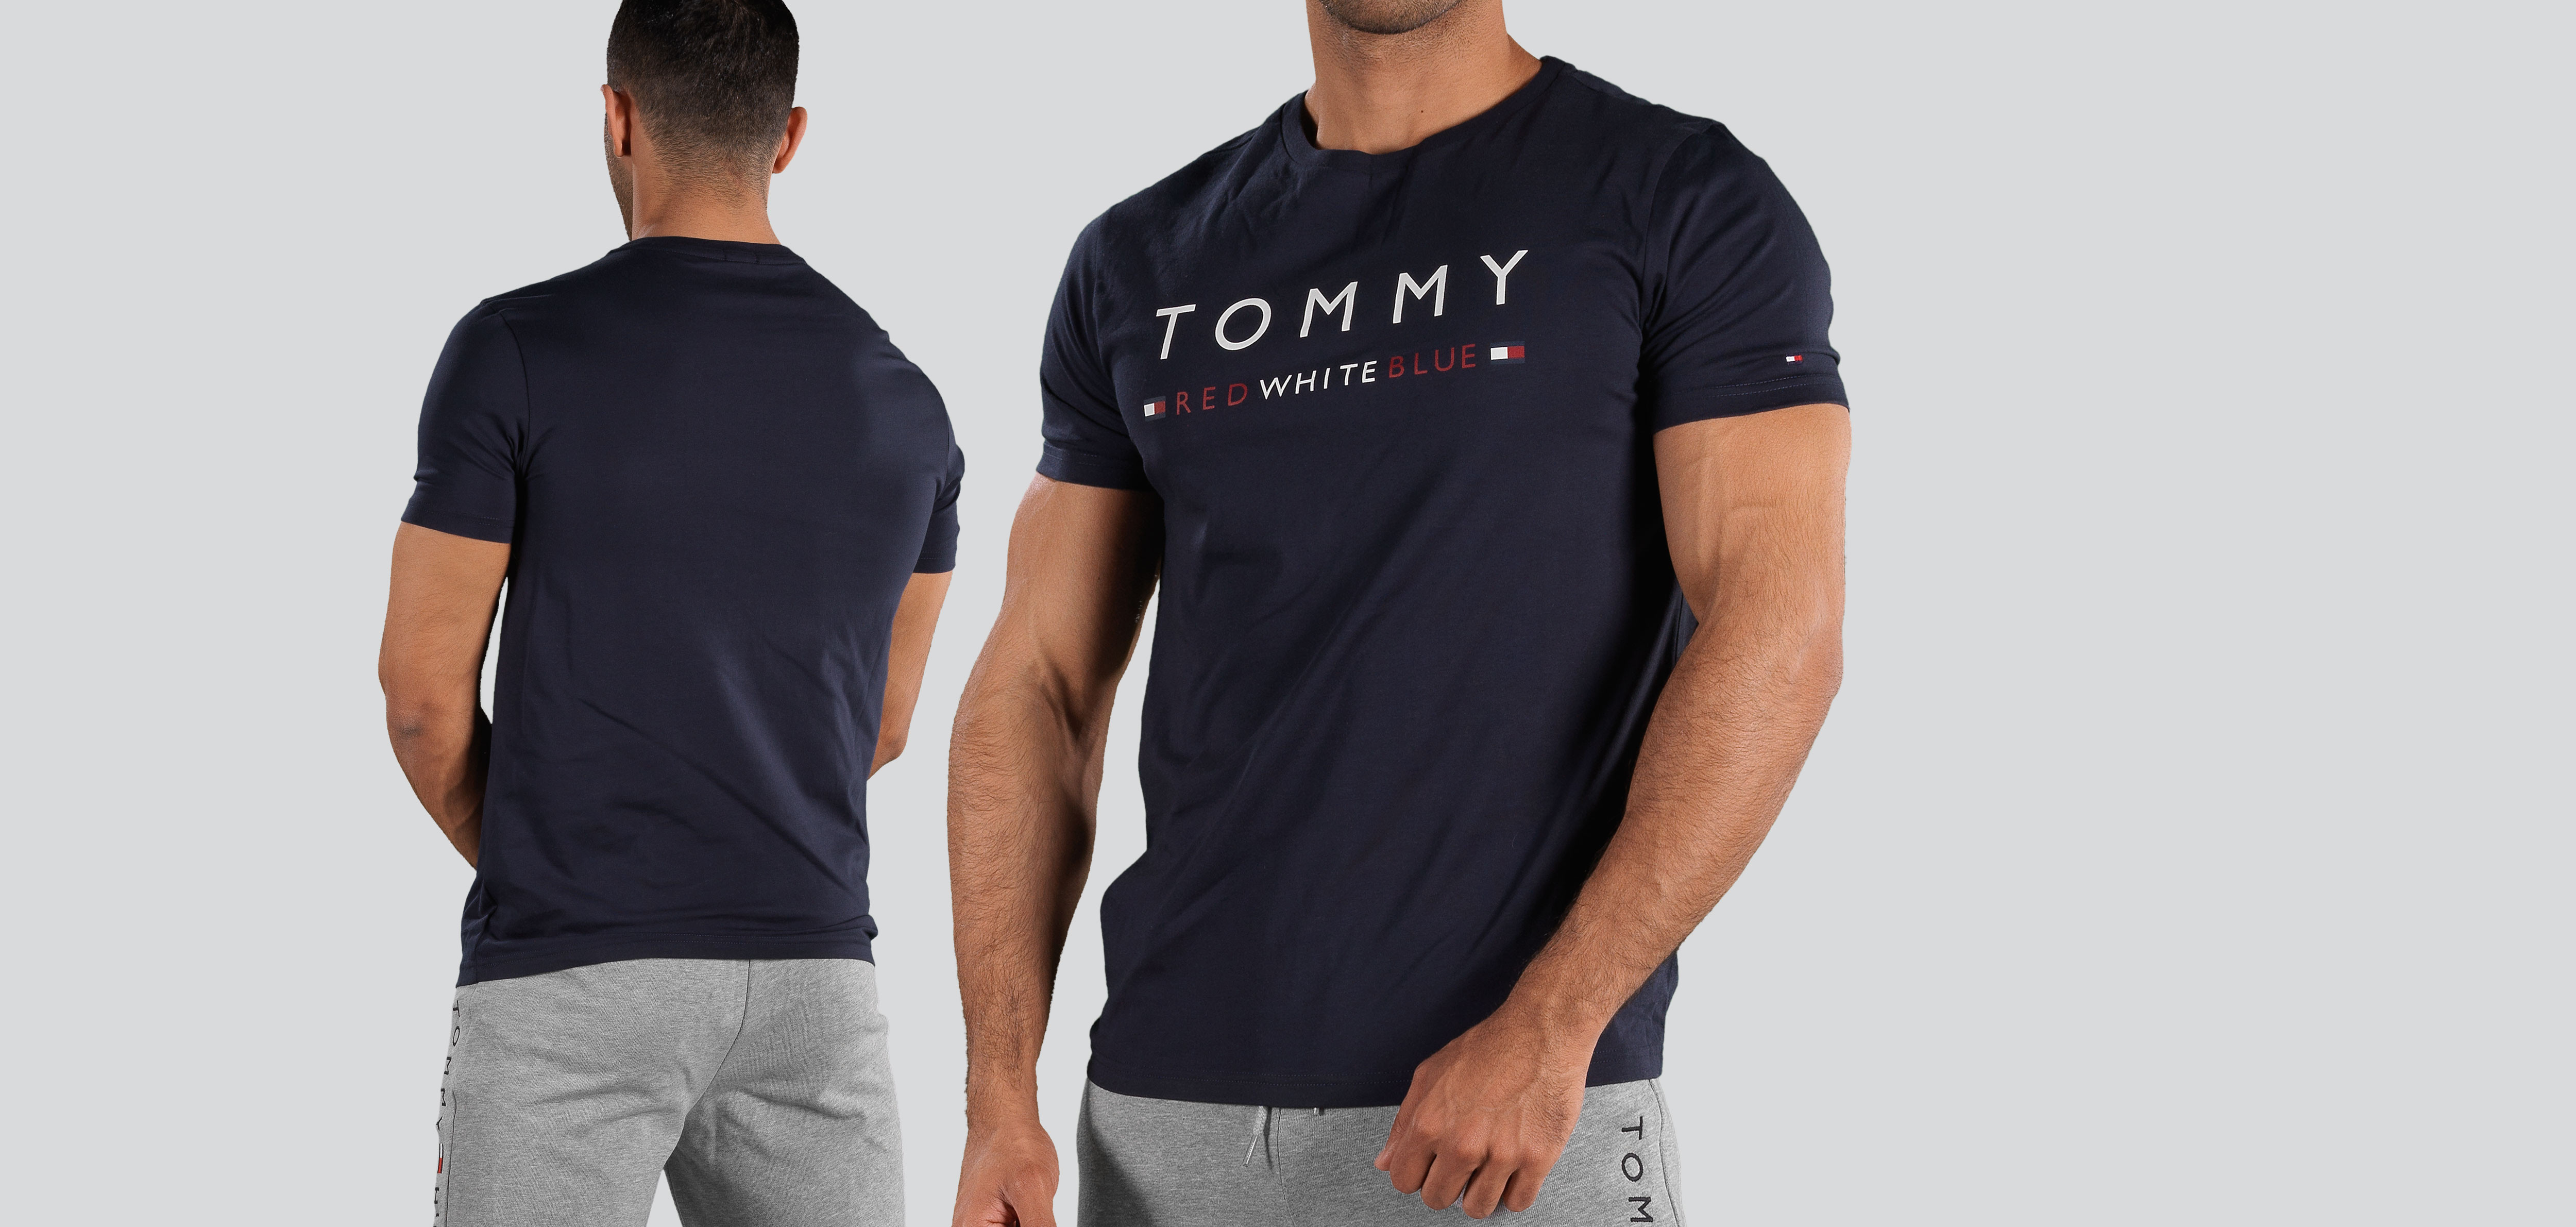 Tommy Hilfiger CN T-Shirt 167, color Nee